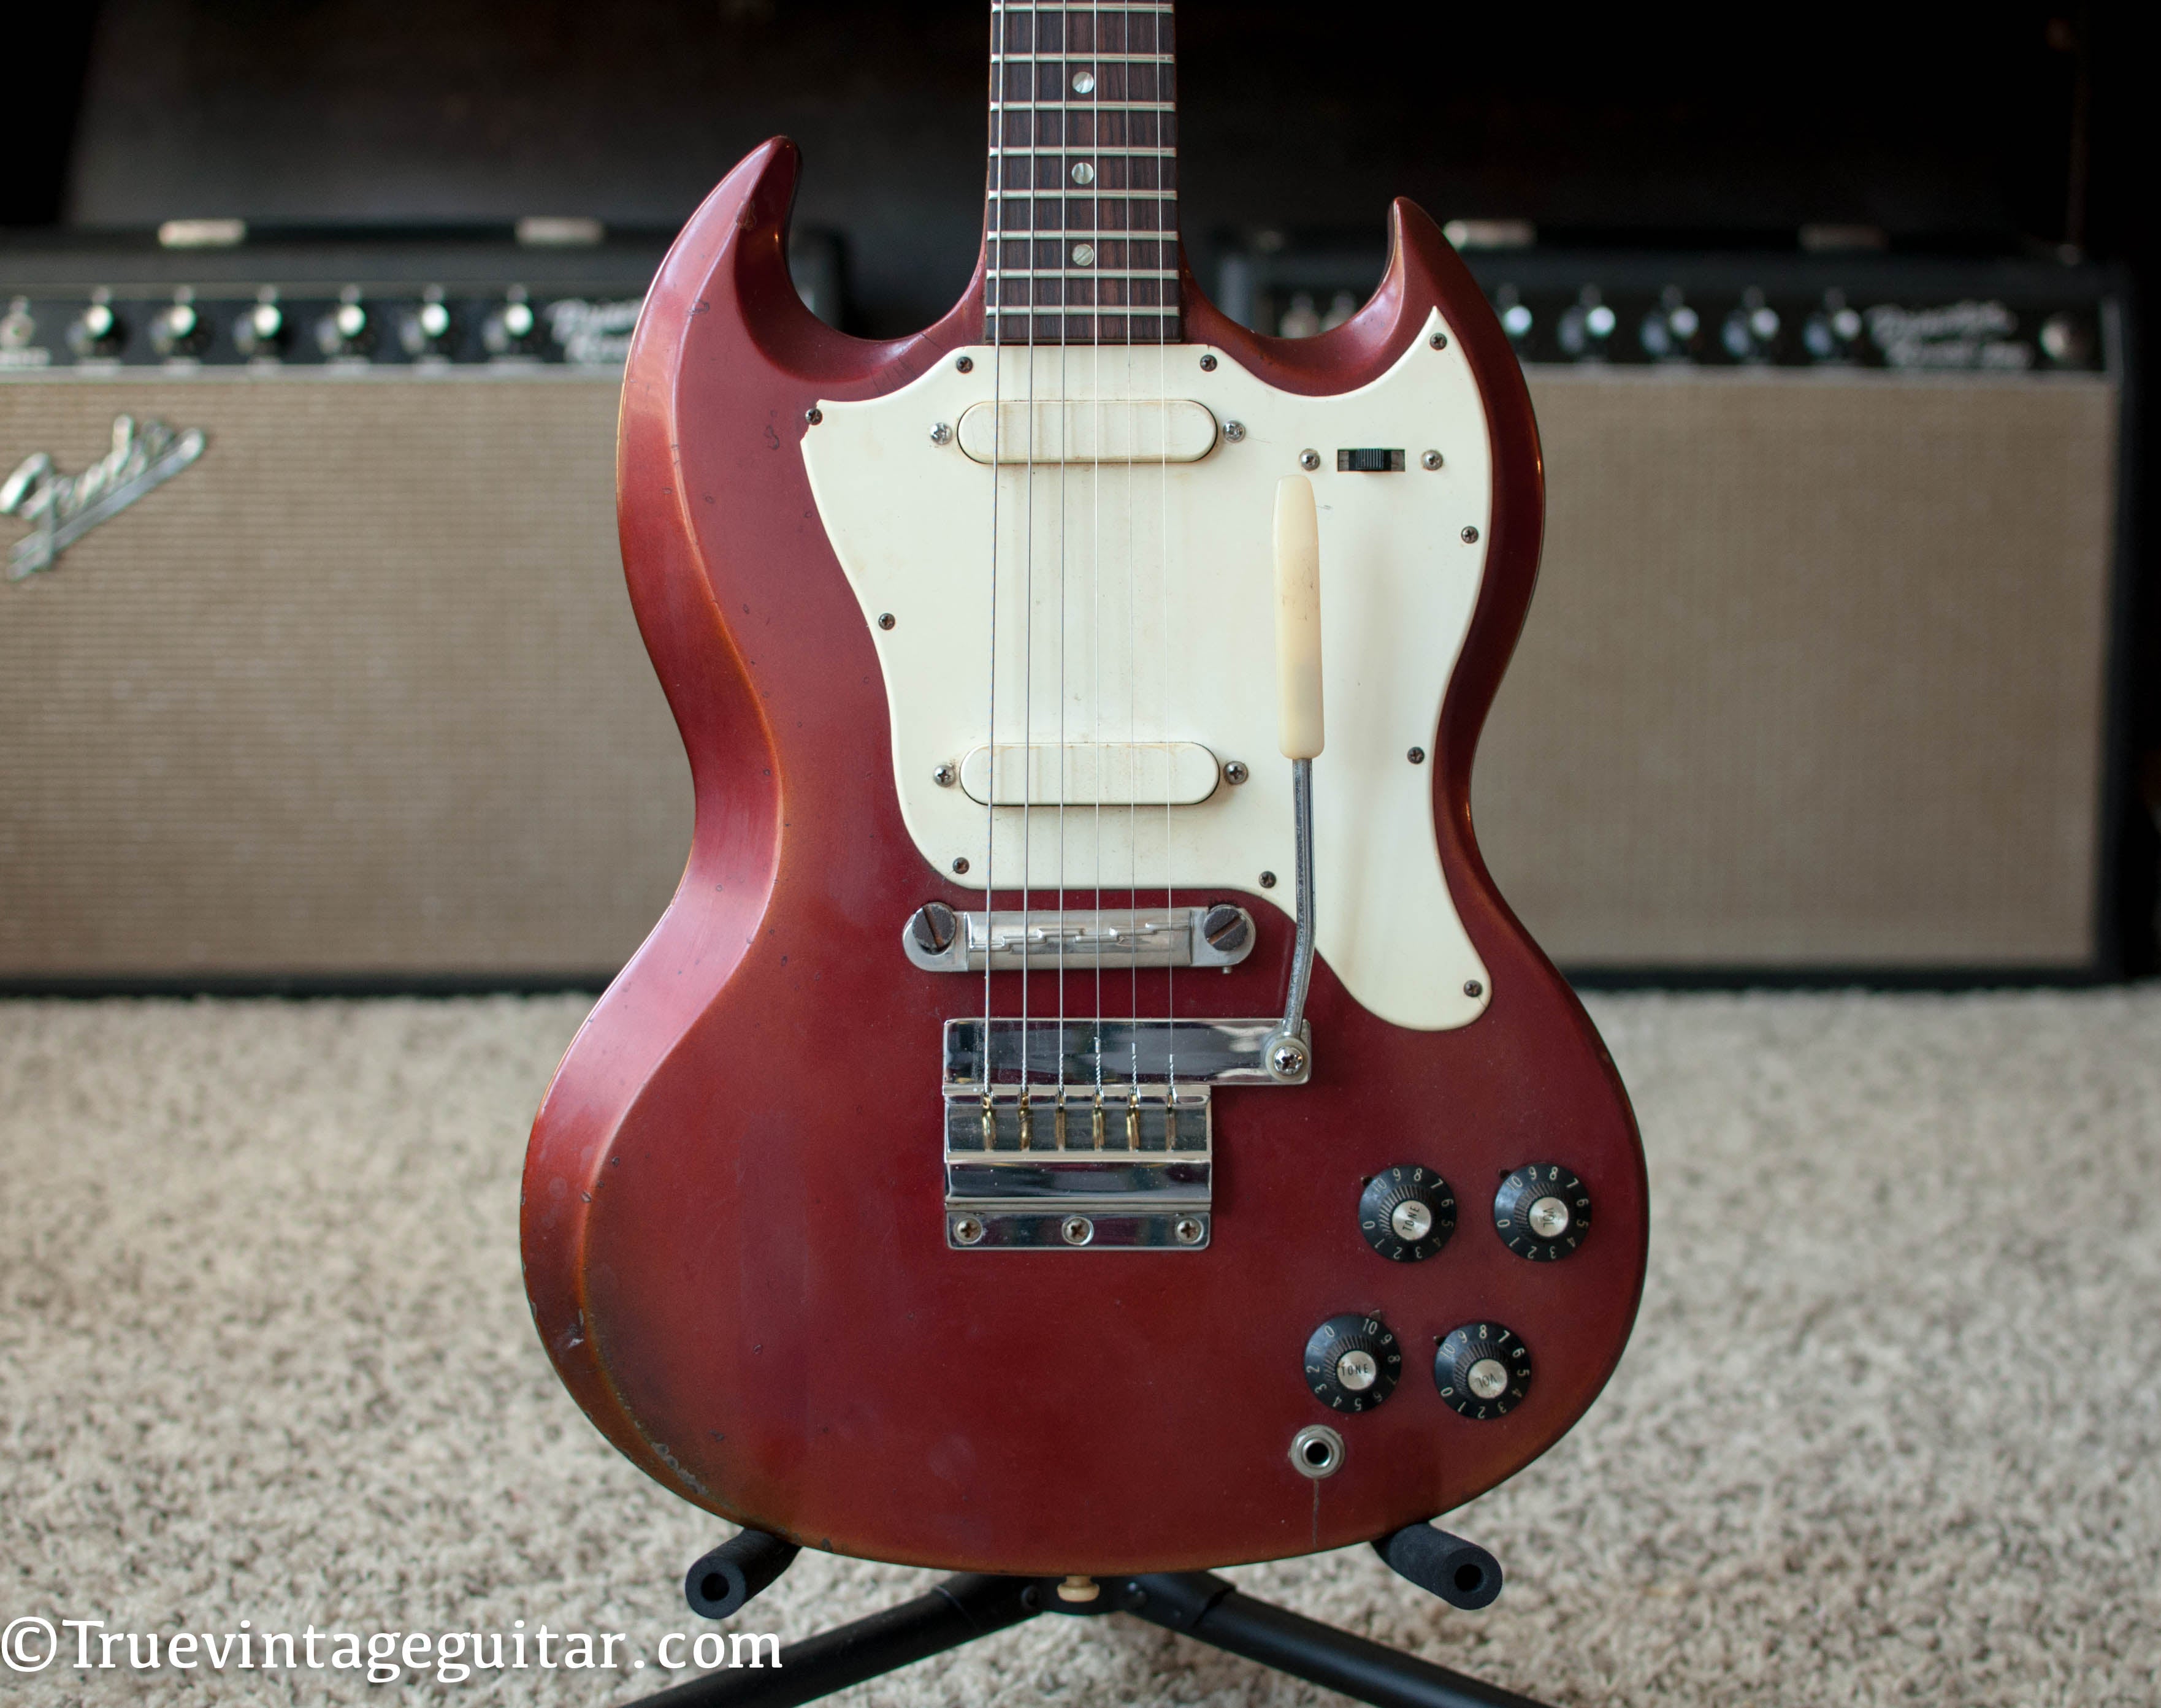 1968 Gibson Melody Maker D Sparkling Burgundy red guitar